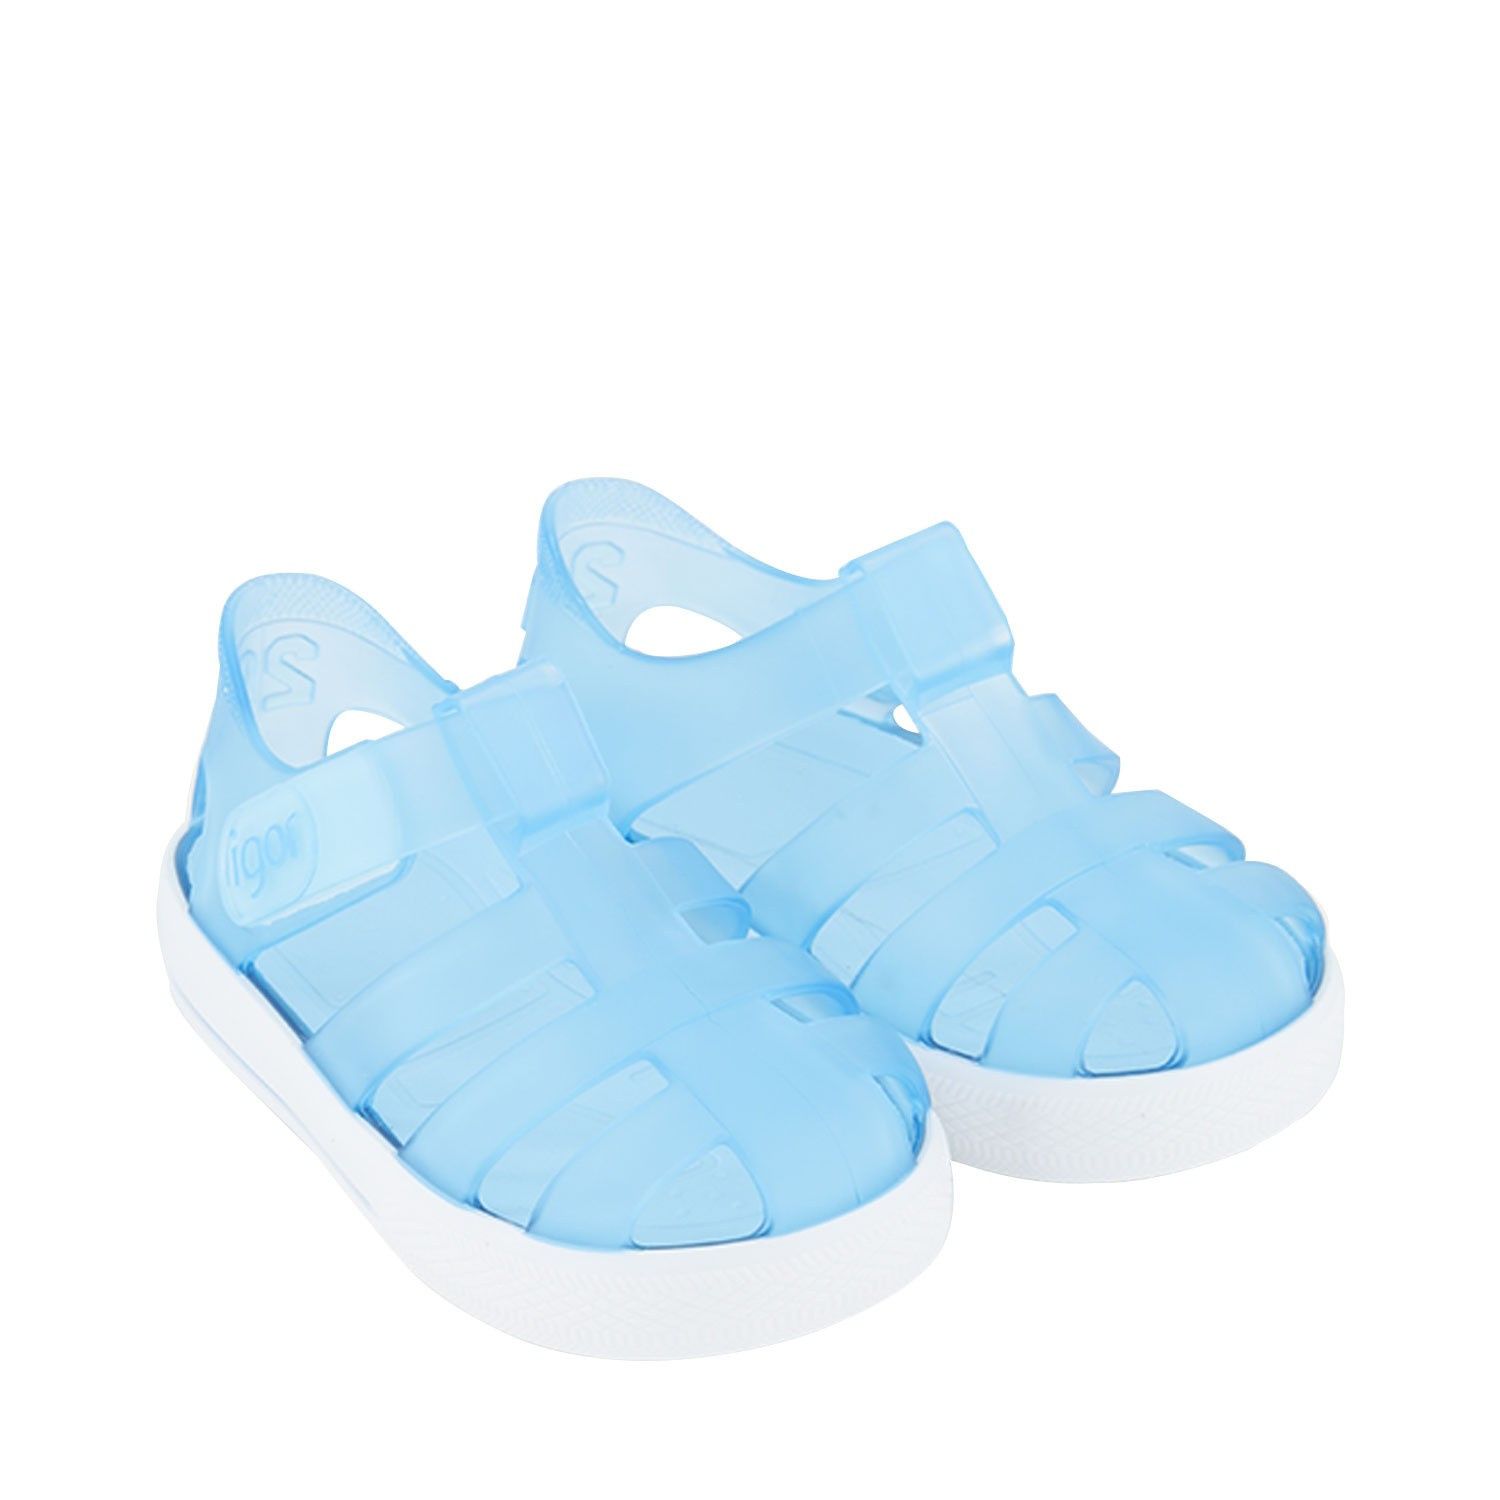 Picture of Igor S10171 kids sandals light blue